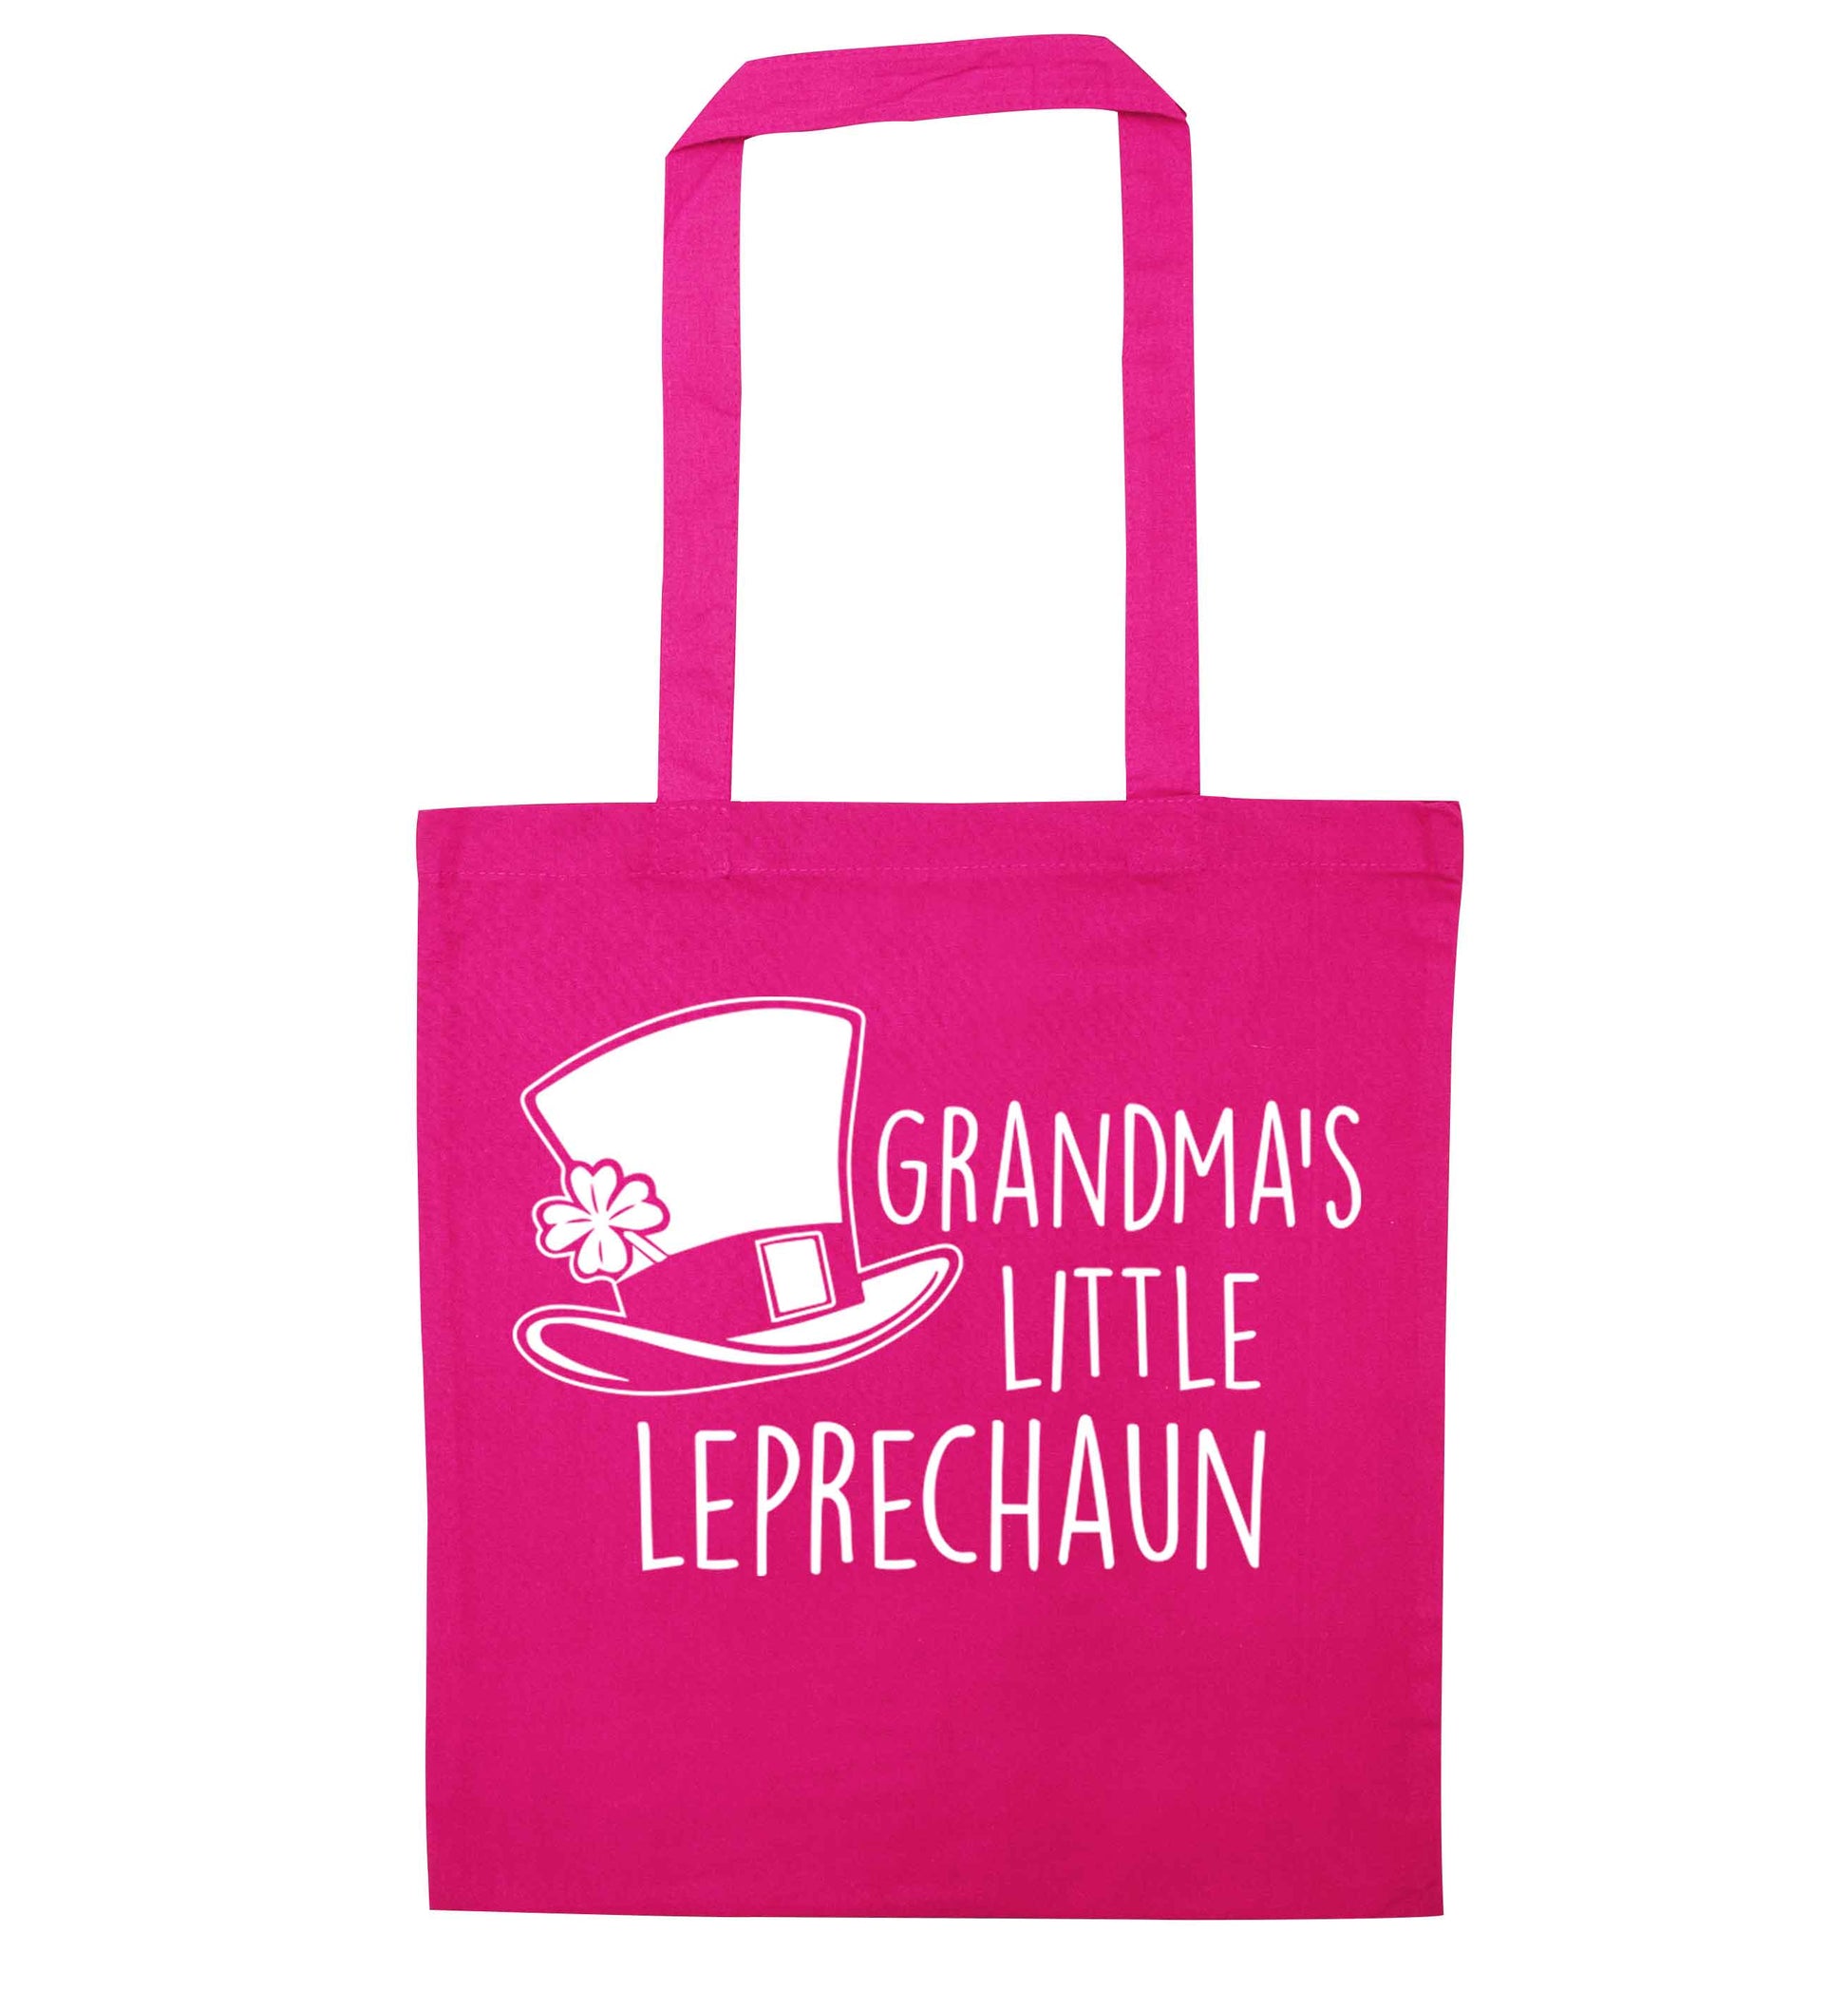 Grandma's little leprechaun pink tote bag